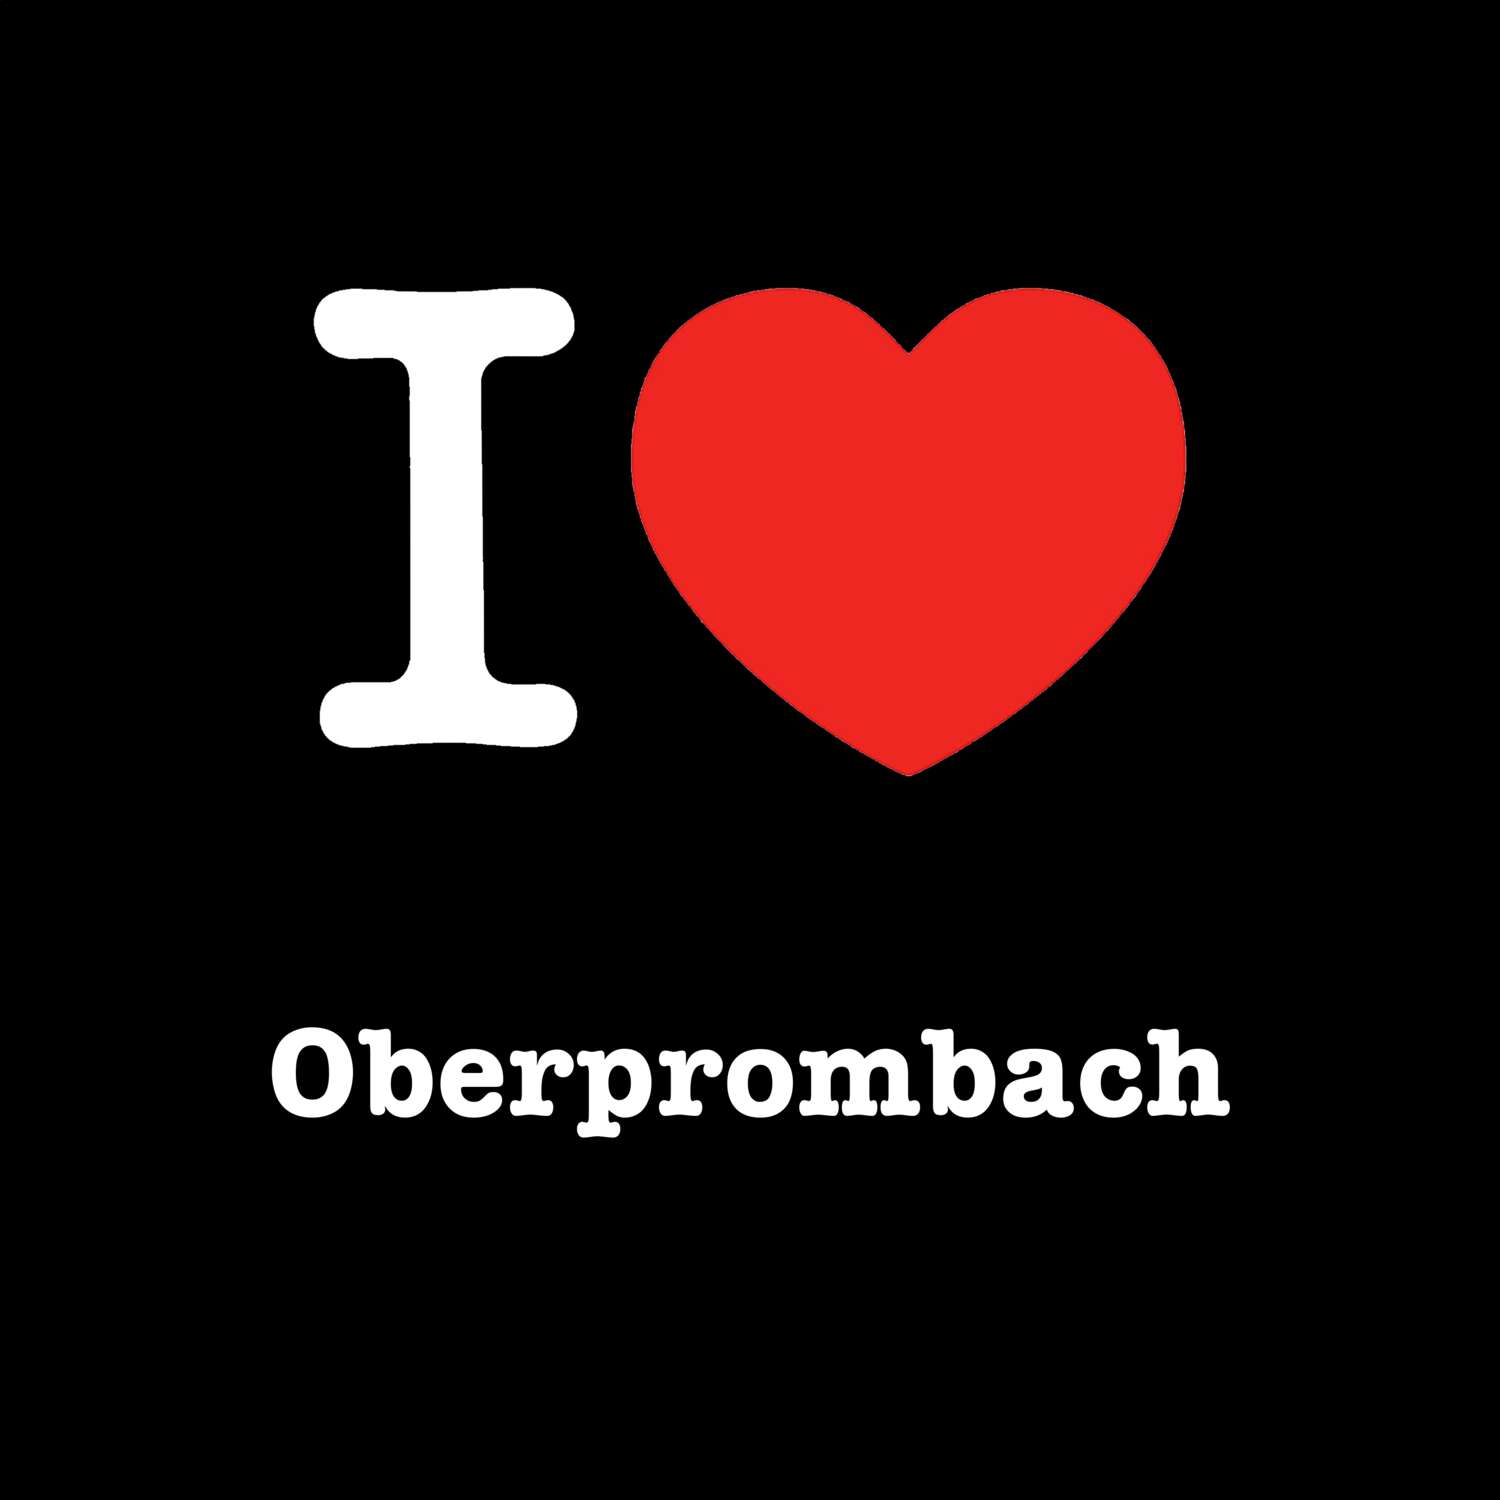 Oberprombach T-Shirt »I love«